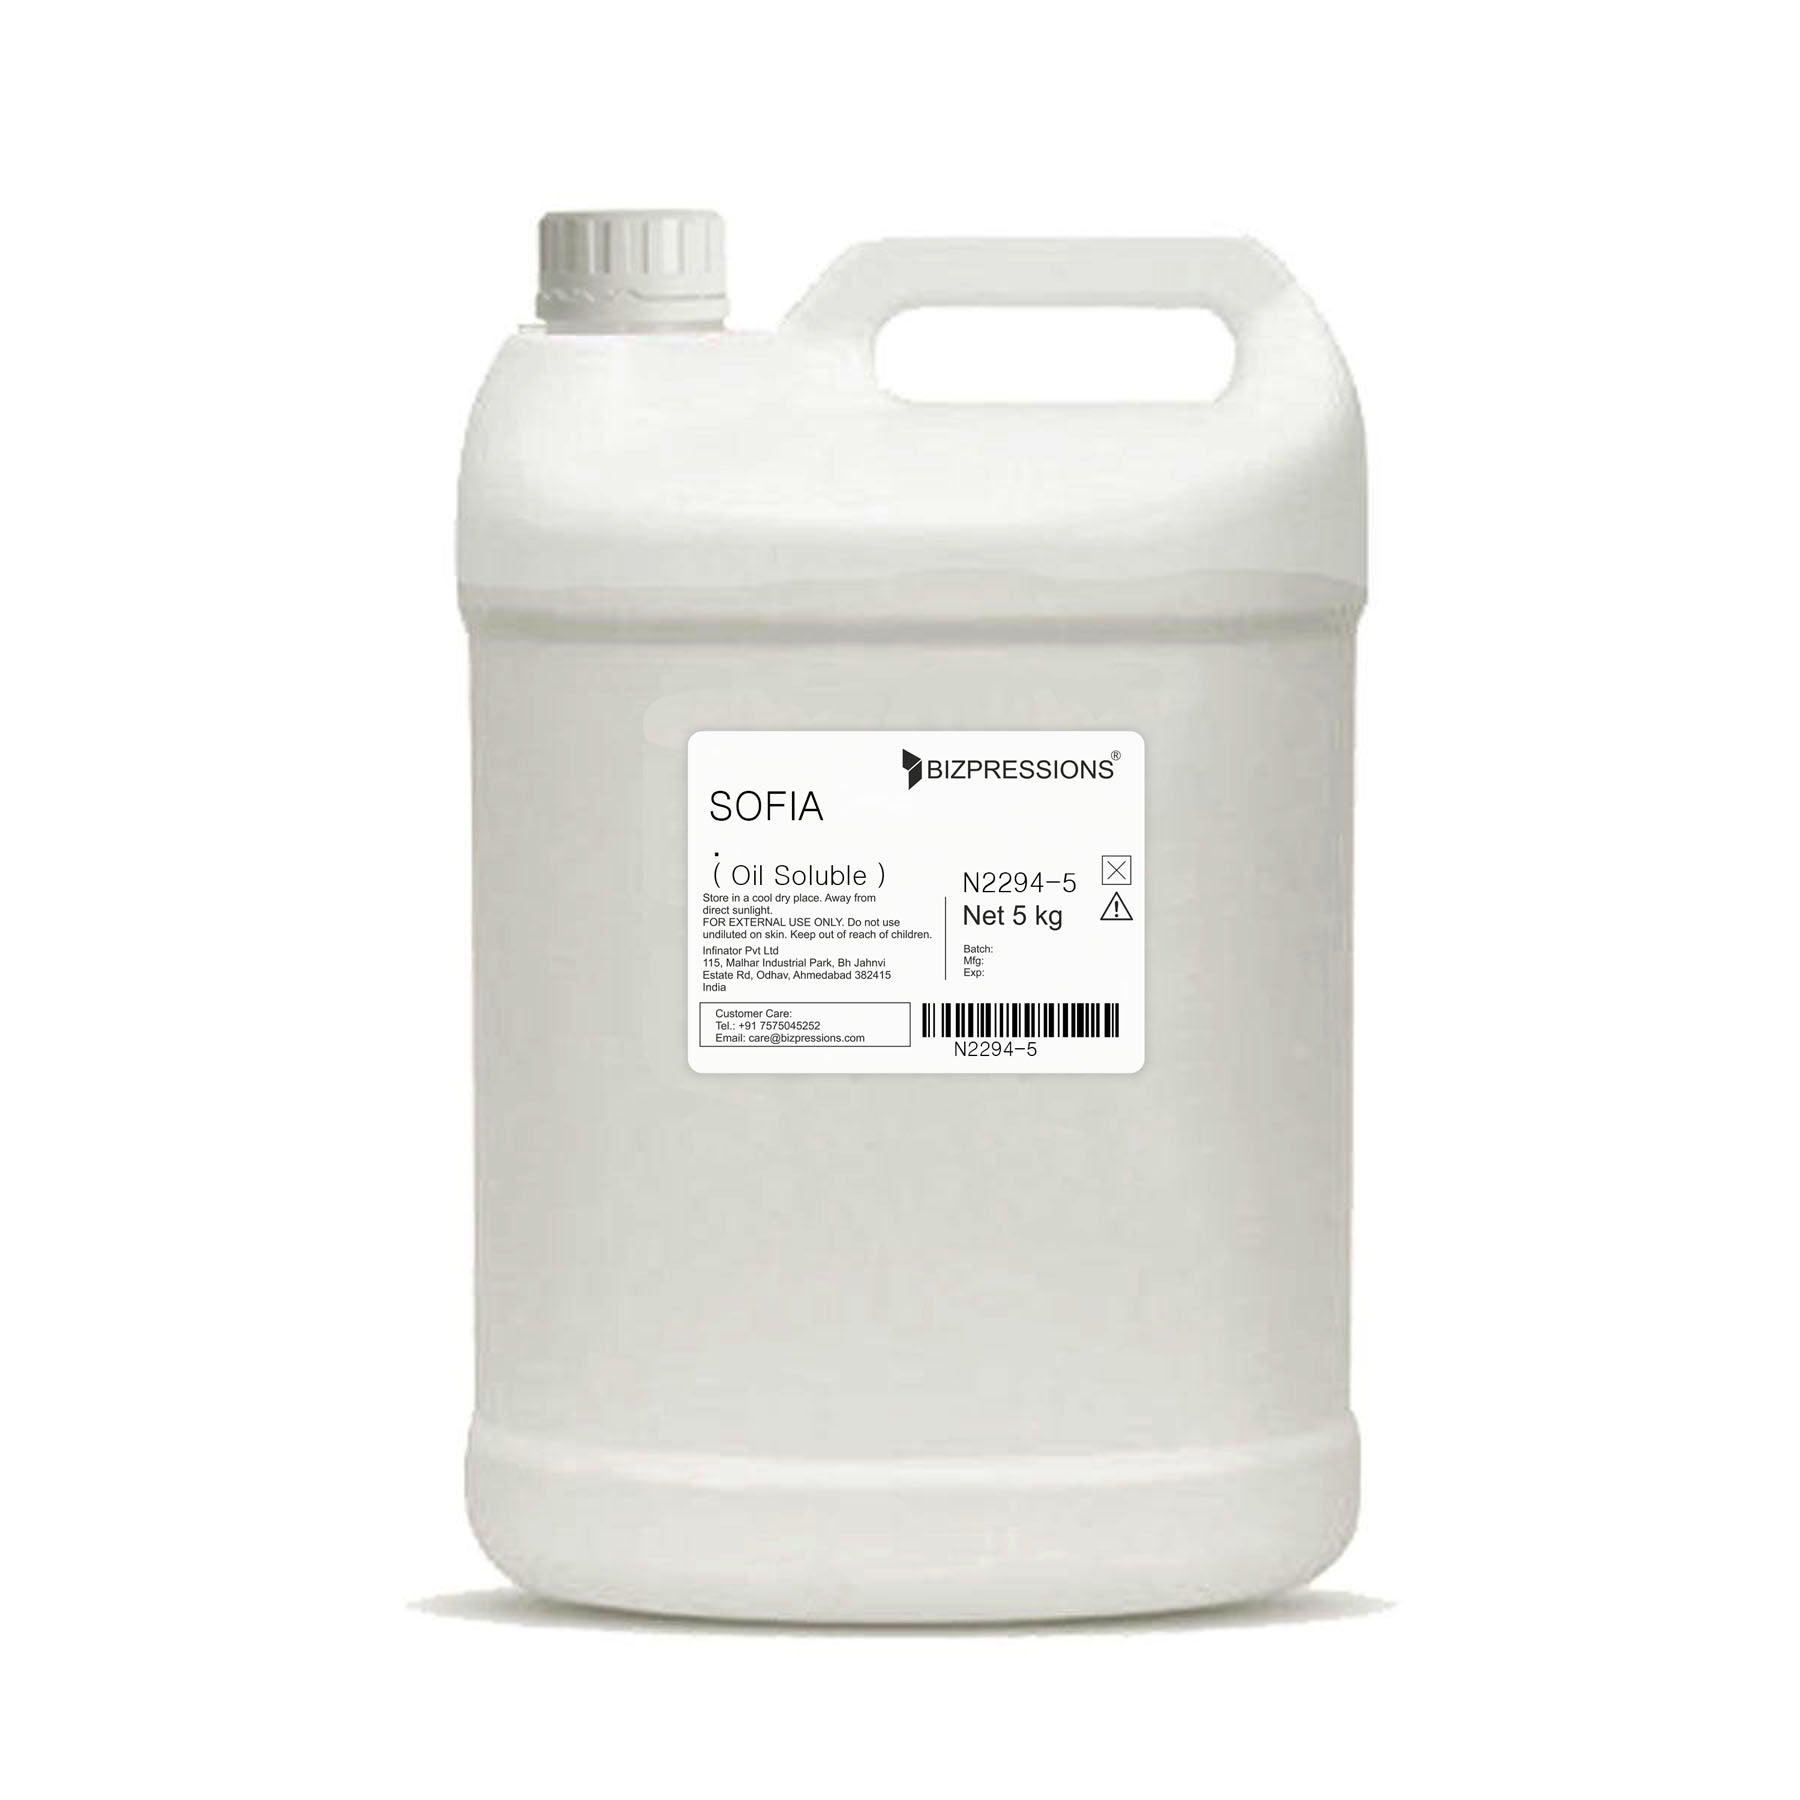 SOFIA - Fragrance ( Oil Soluble ) - 5 kg